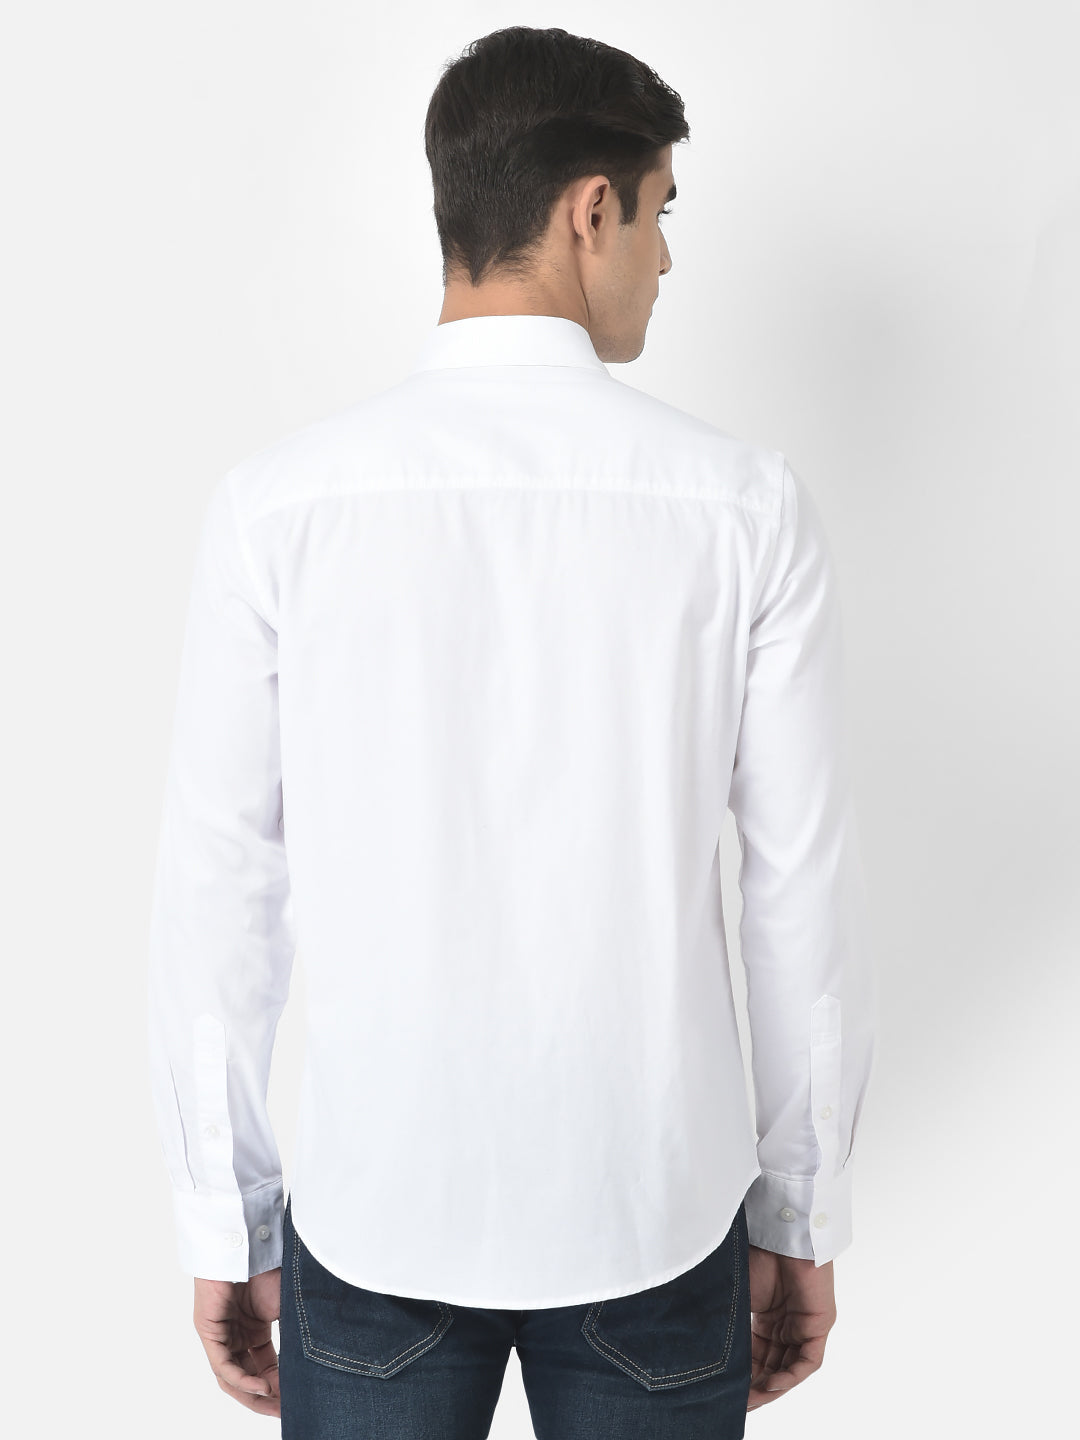  White Button-Down Shirt in Pure Cotton